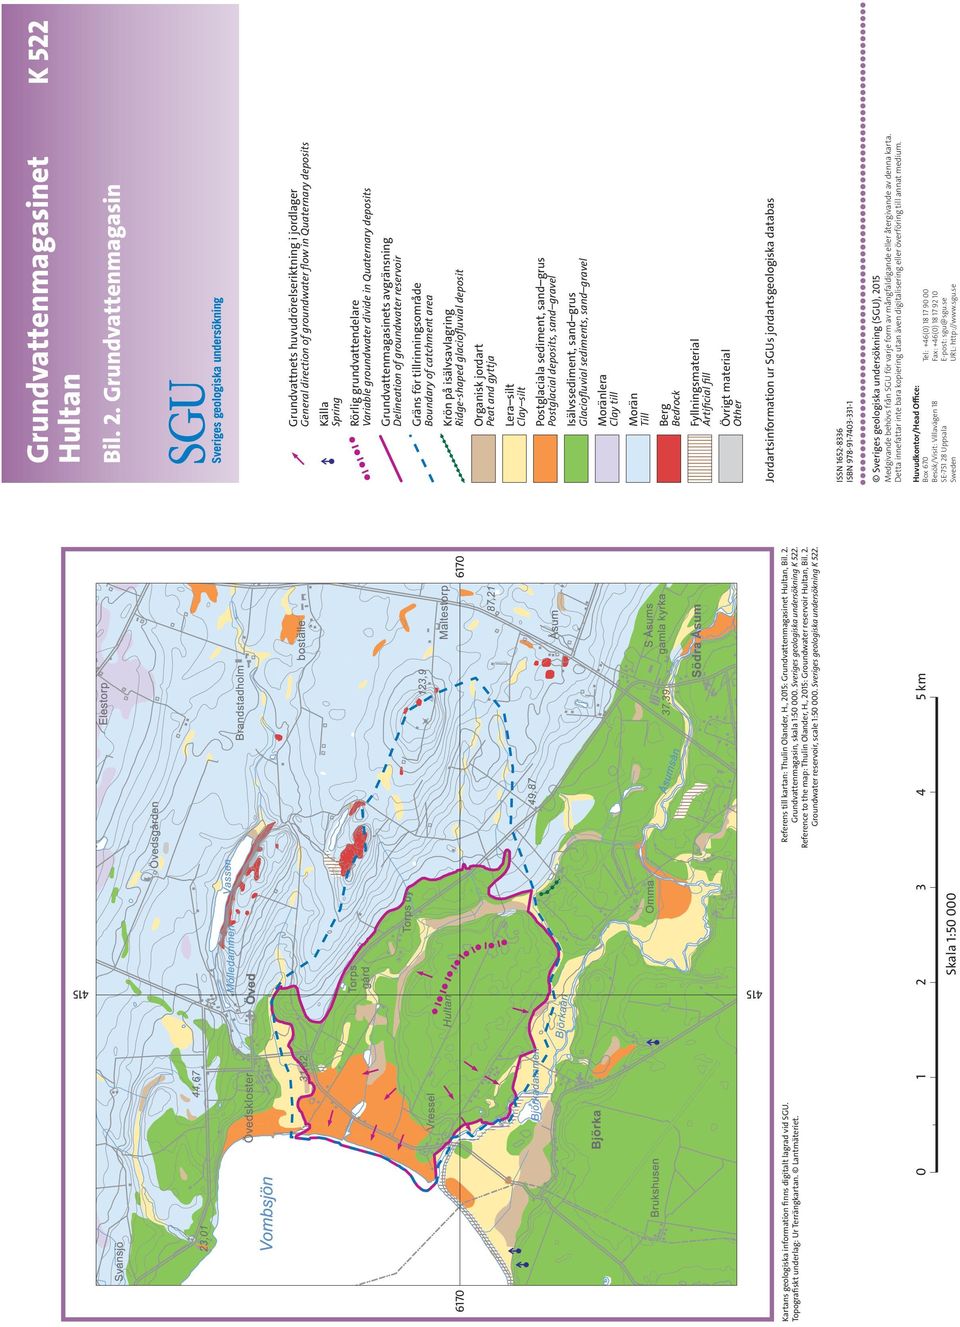 , 2015: Groundwater reservoir Hultan, Bil. 2. Groundwater reservoir, scale 1:50 000. Sveriges geologiska undersökning K 522. 0 1 2 3 4 5 km Skala 1:50 000 Grundvattenmagasinet Hultan Bil. 2.